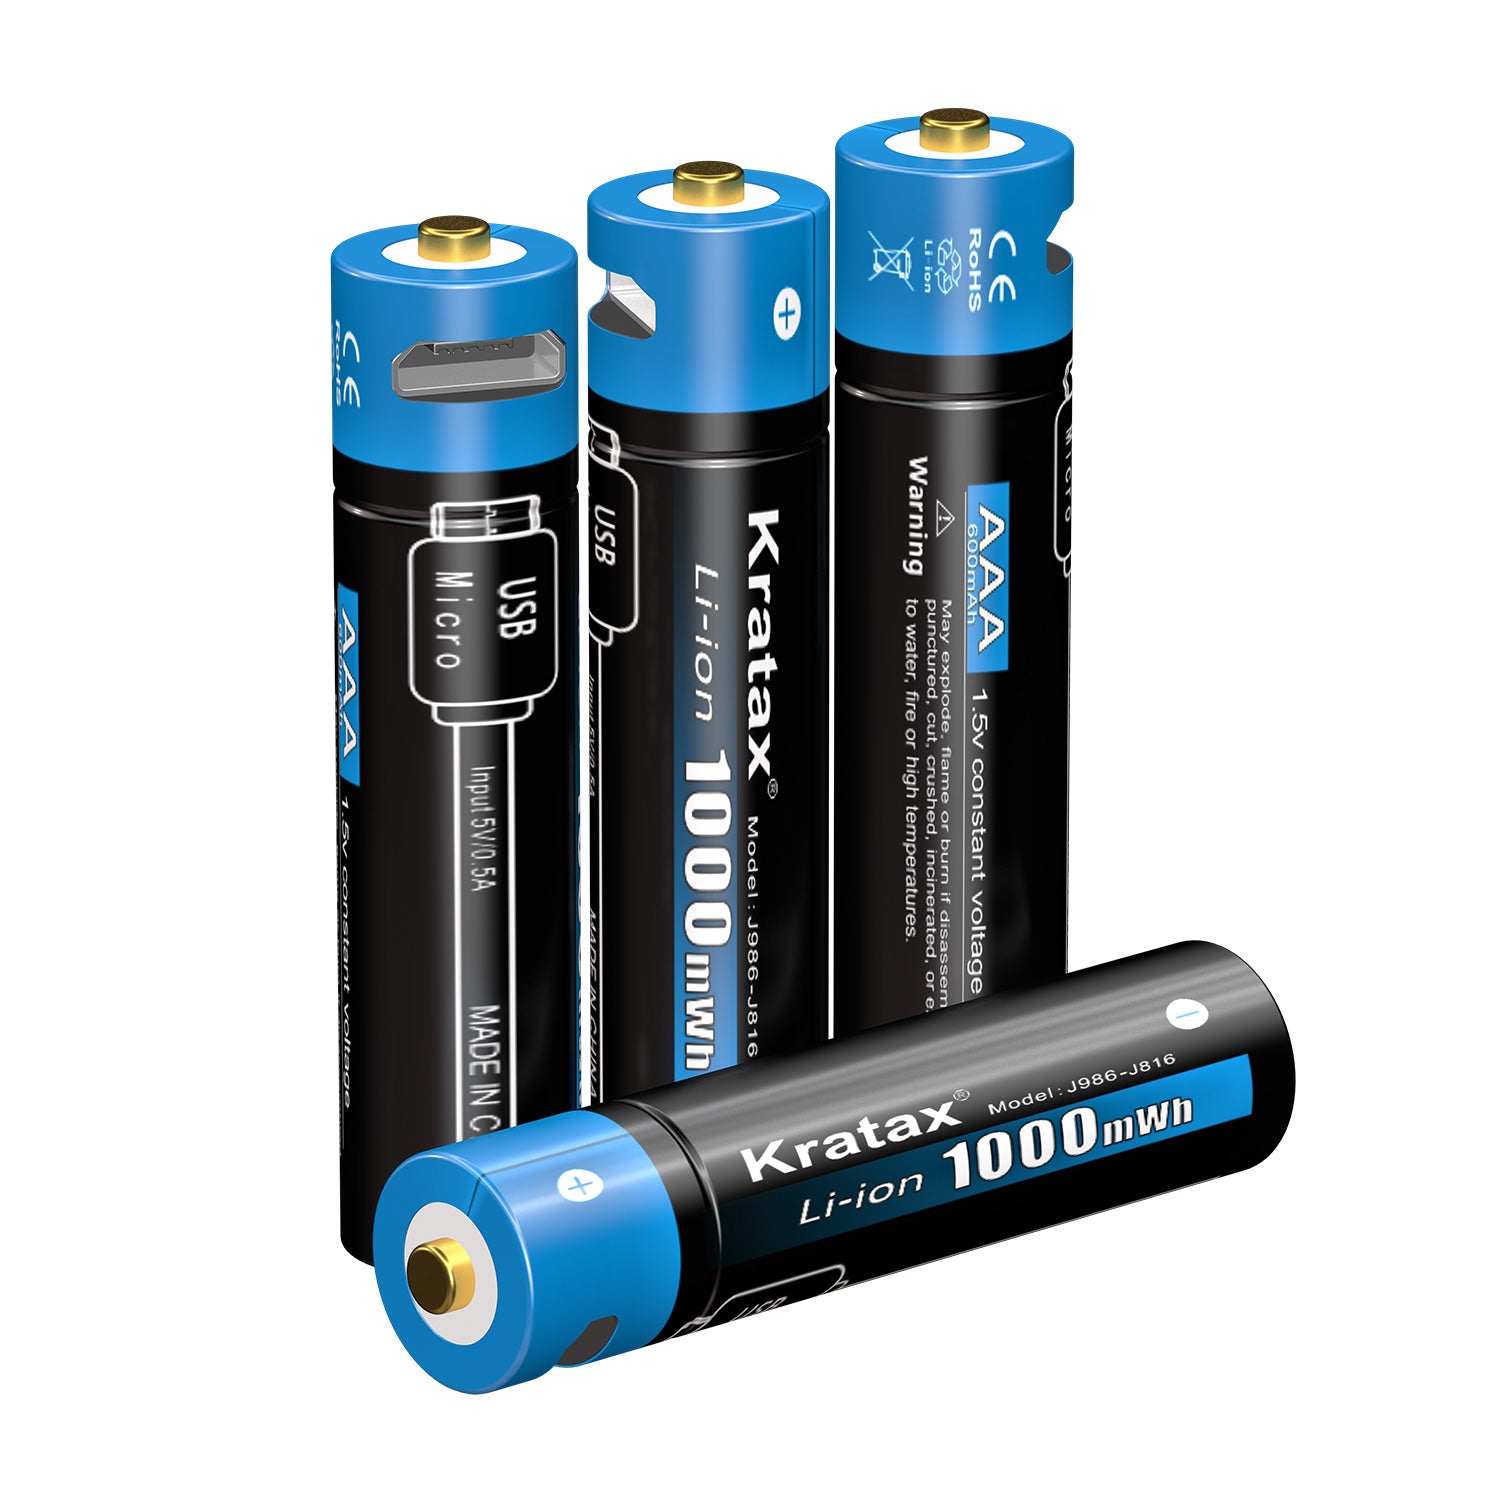 Kratax 1.5V Rechargeable AA AAA Lithium Batteries, 4-Pack 3500mWh Lithium  AA Batteries and 4-Pack 1100mWh AAA Lithium Batteries with Charger 